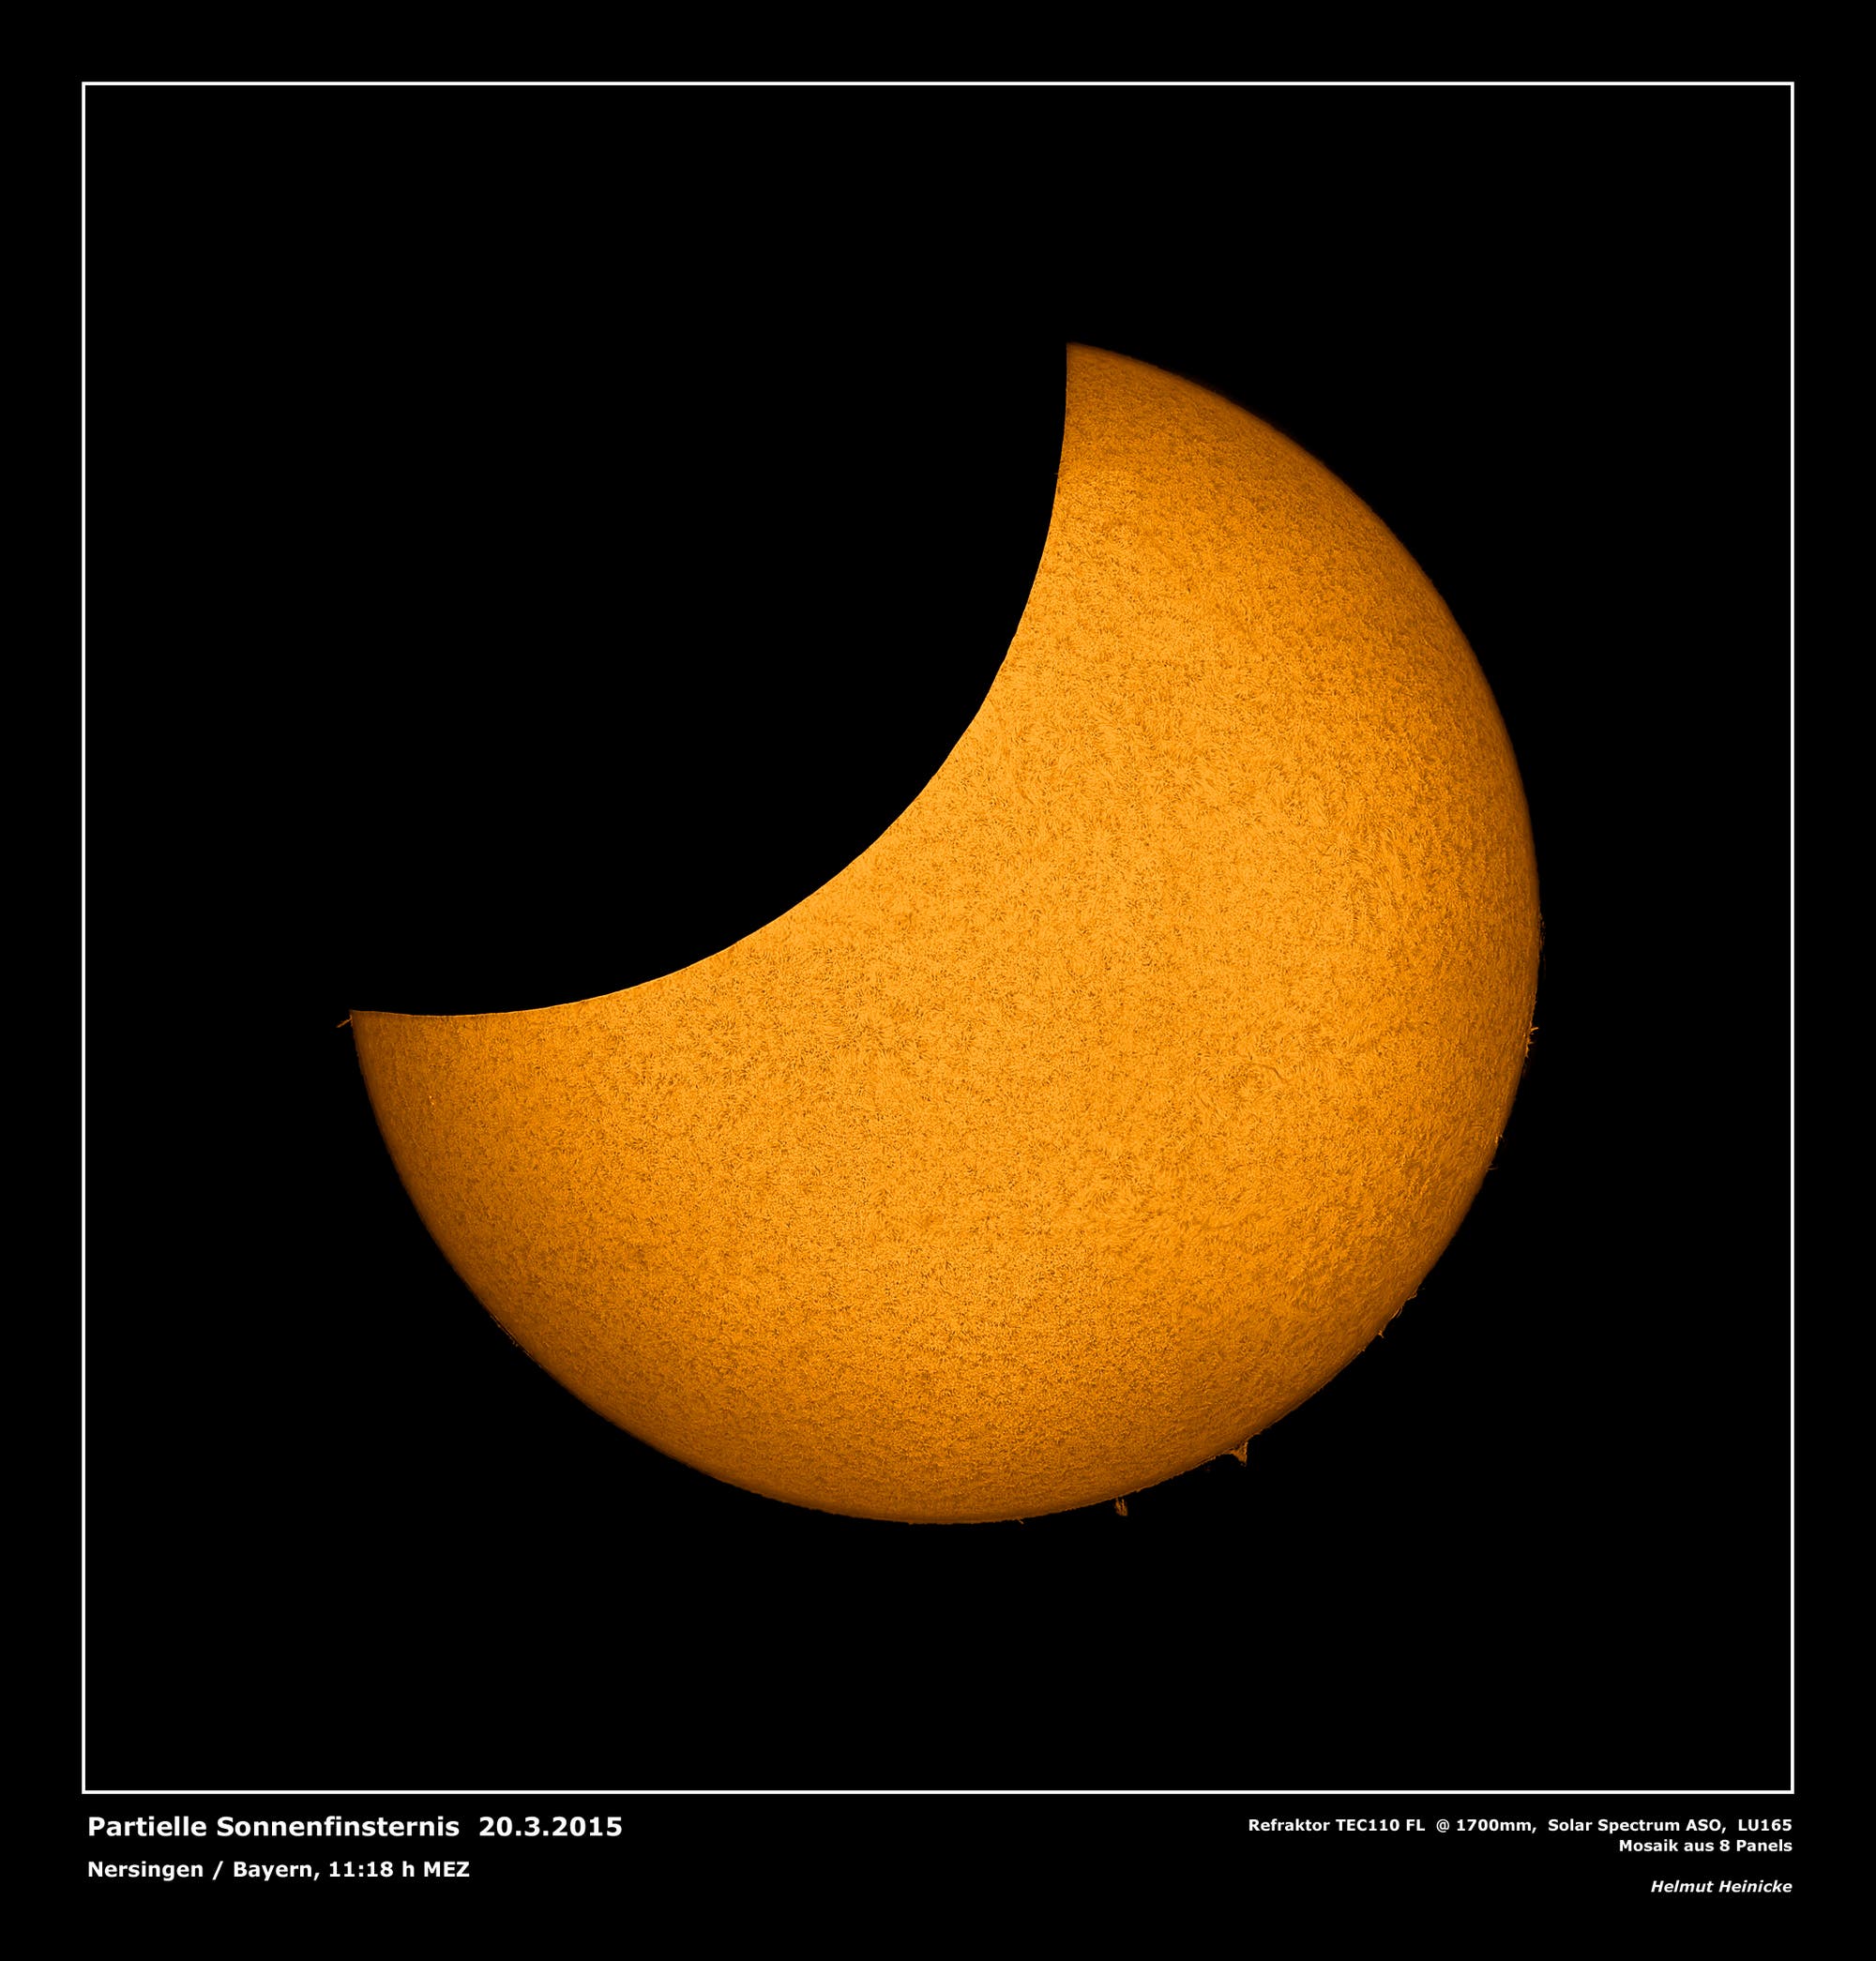 Sonnenfinsternis 20.3.2015 in H-Alpha